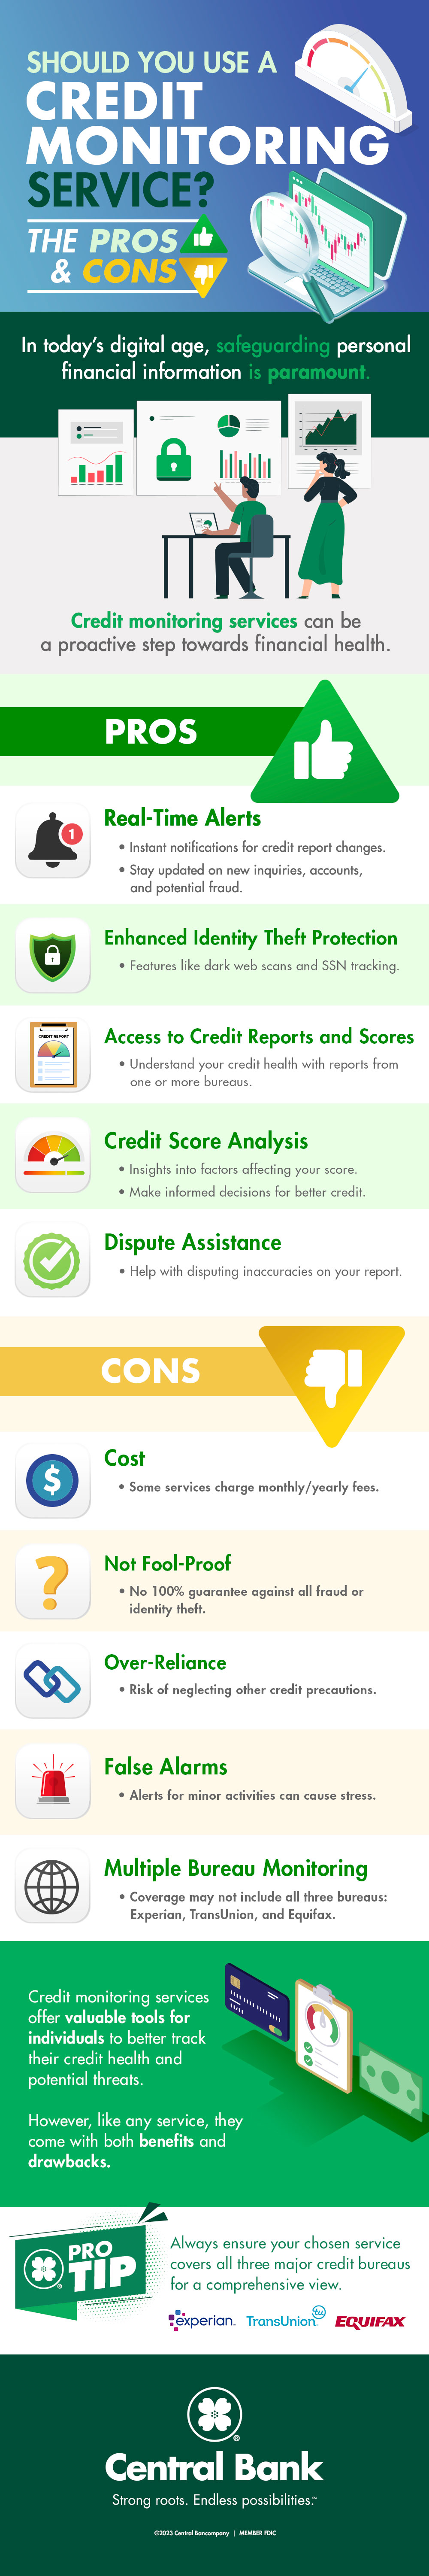 Credit monitoring infographic 